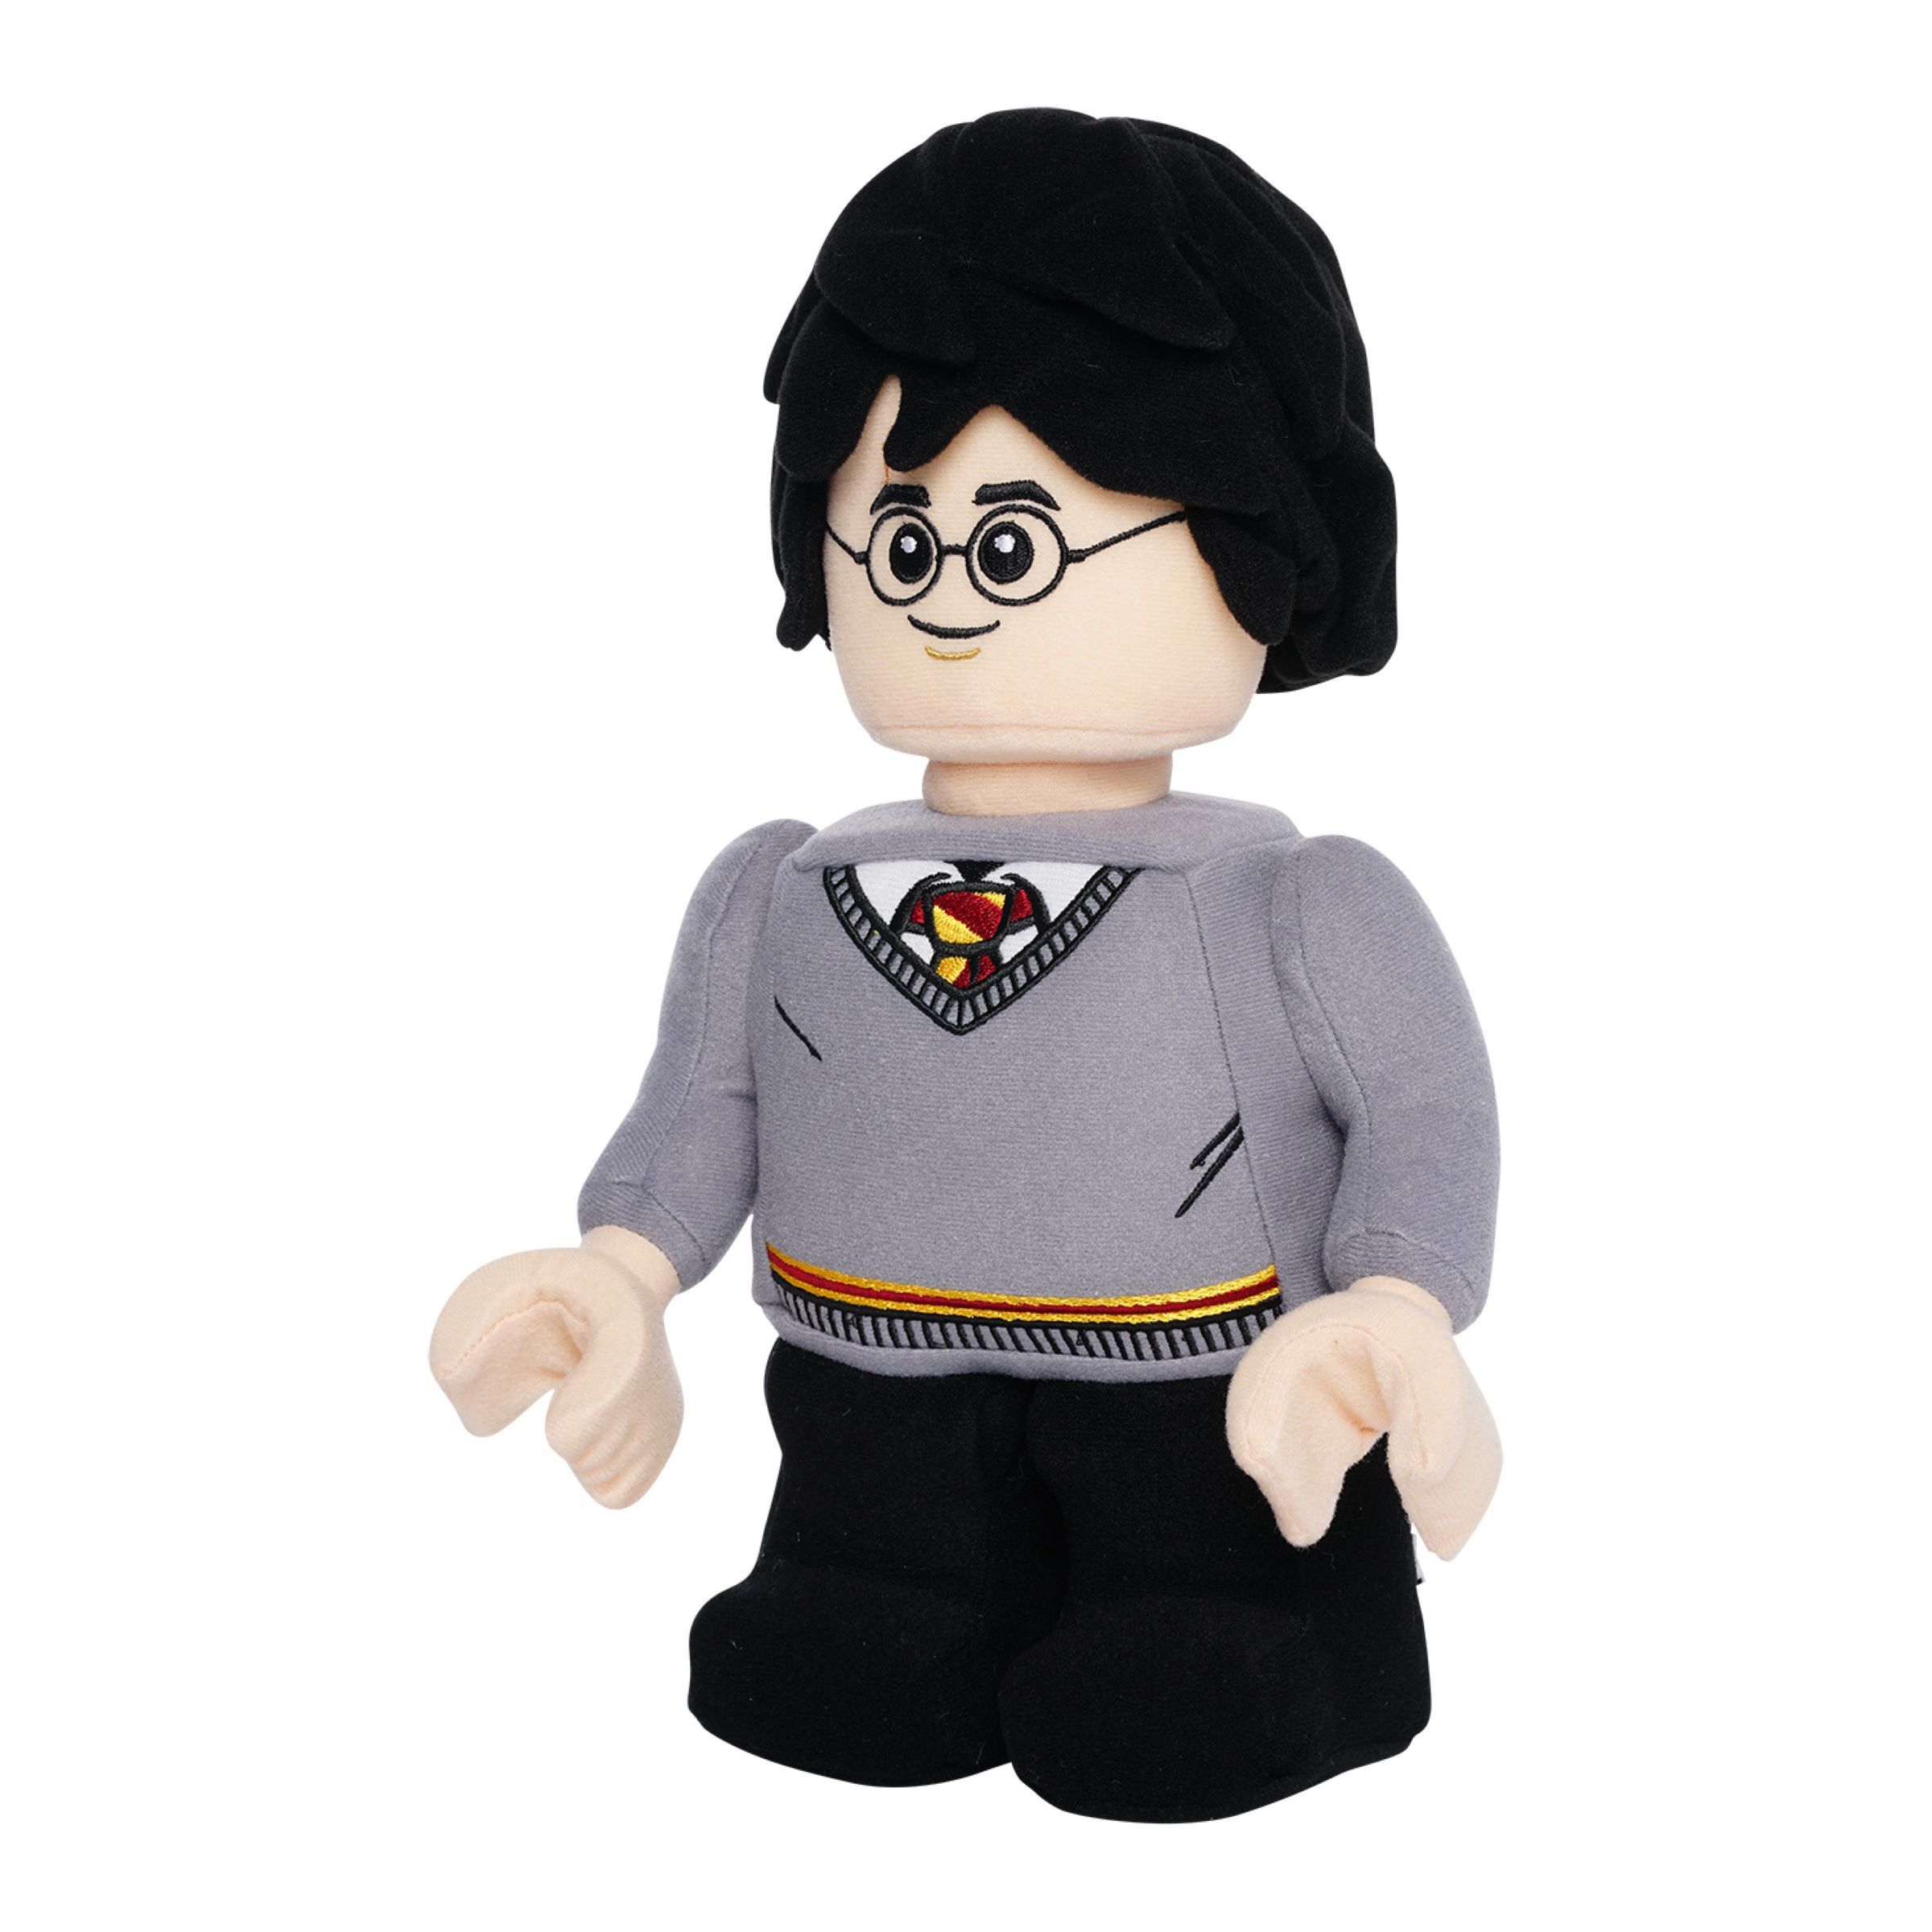 LEGO Gear 5007455 Harry Potter™ Plüschfigur LEGO_5007455_alt1.jpg